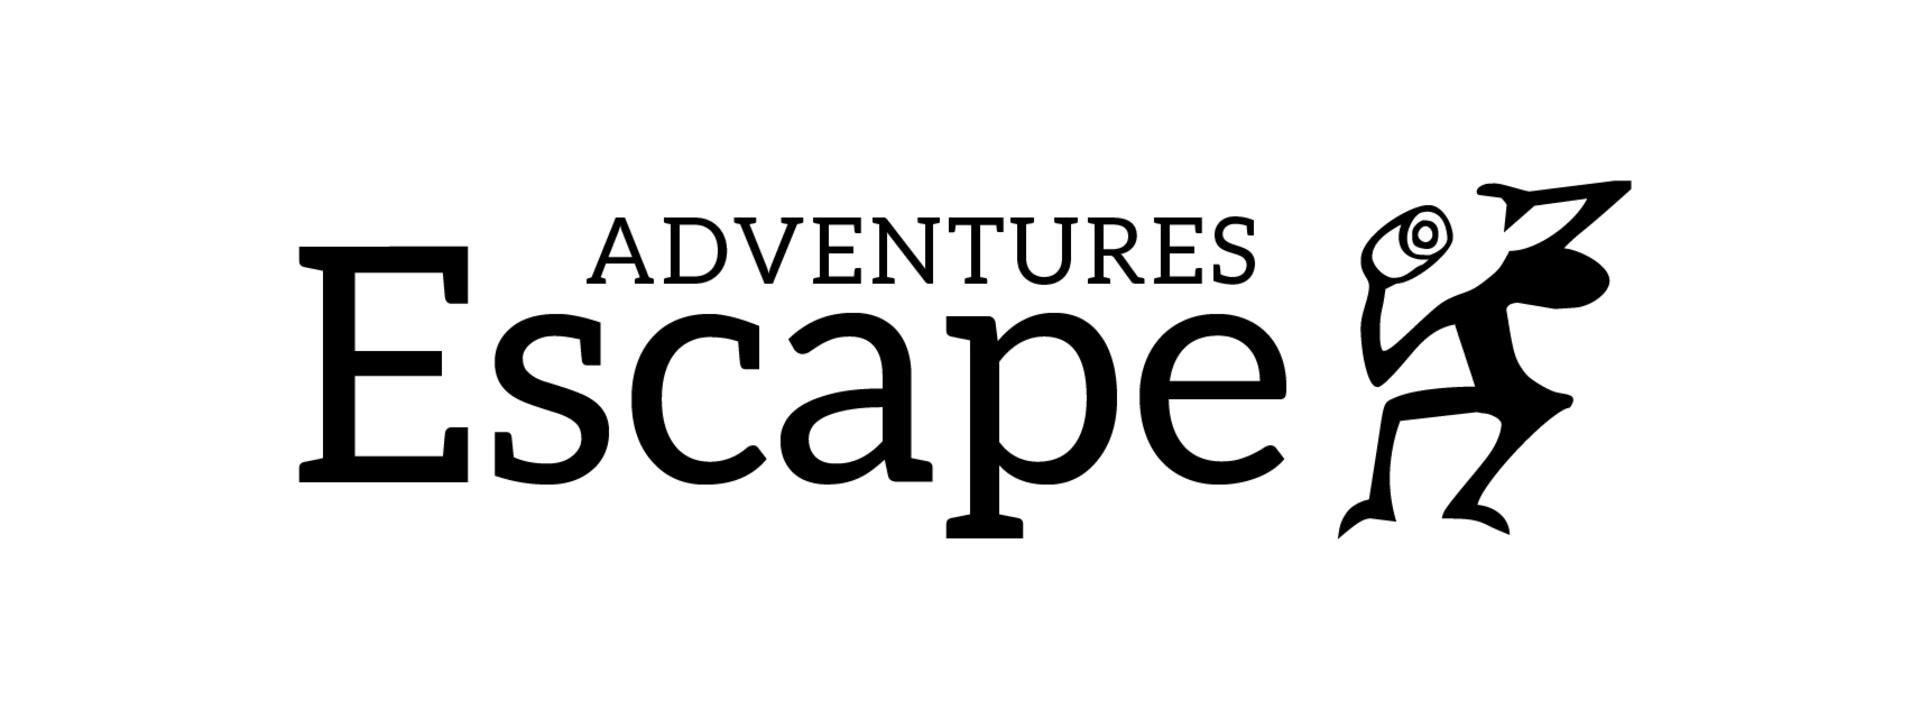 9310 Escape Adventures New Logo black.jpg